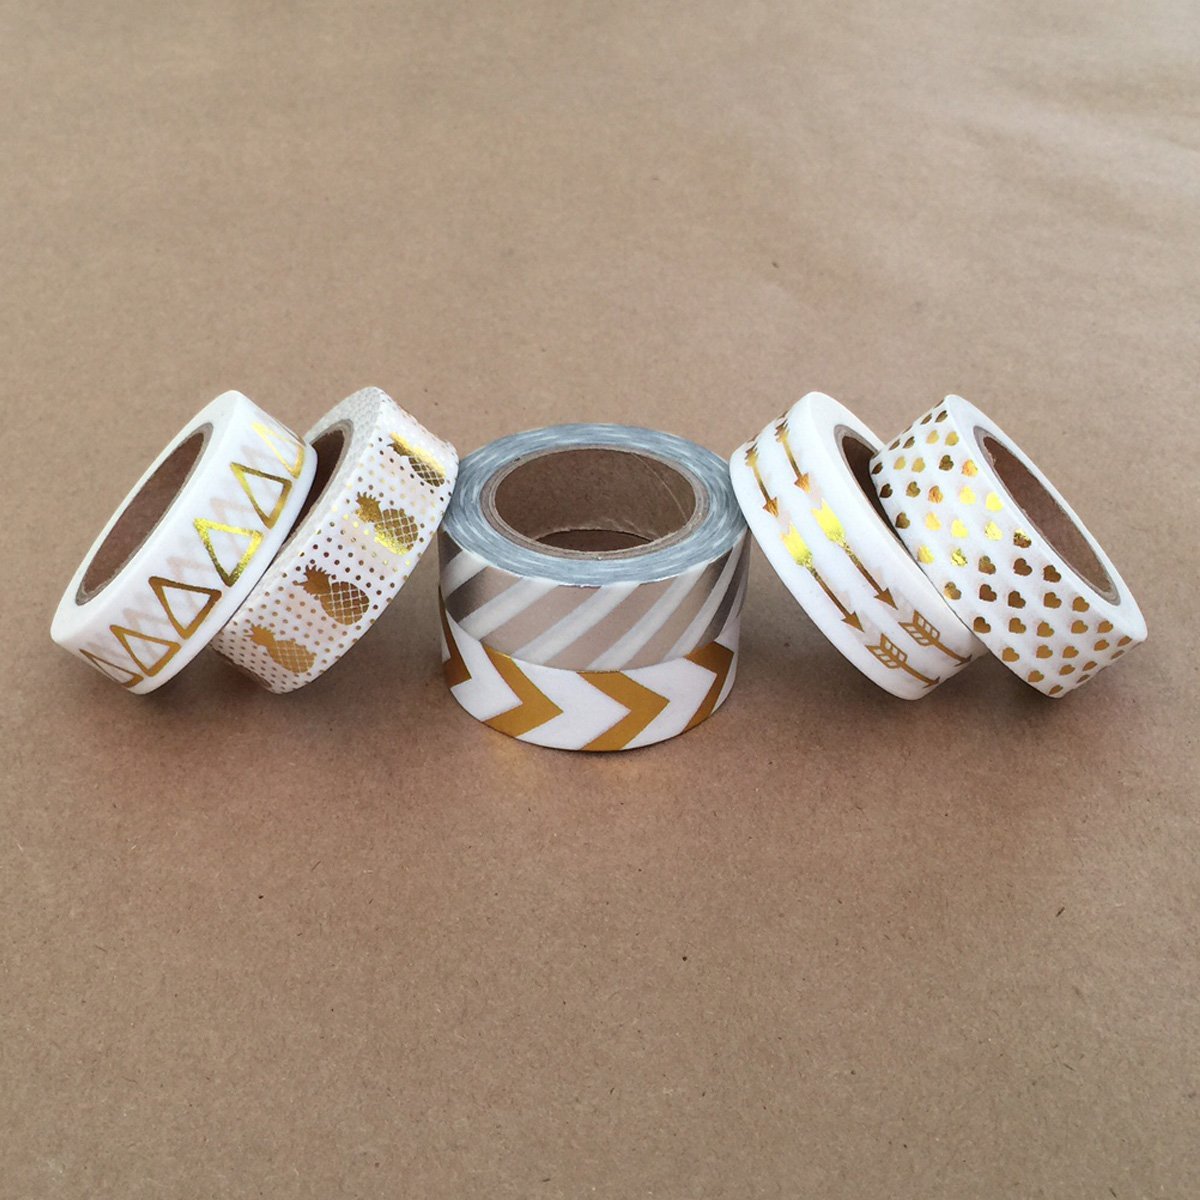 Wrapables Washi Tapes Decorative Masking Tapes, Set of 6